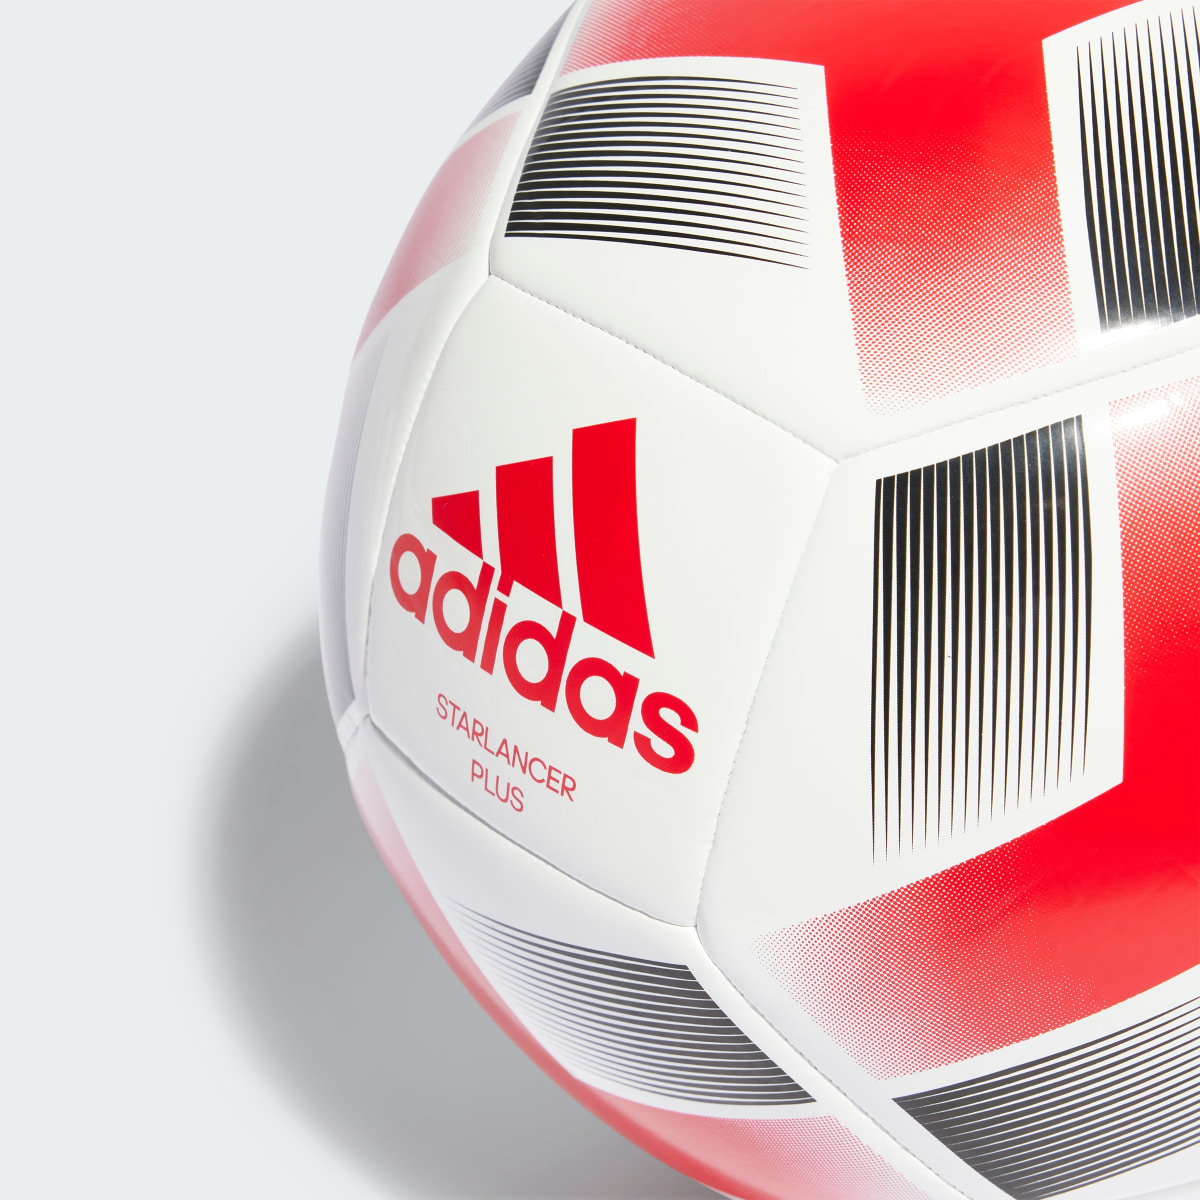 Adidas Starlancer Plus Football. 4